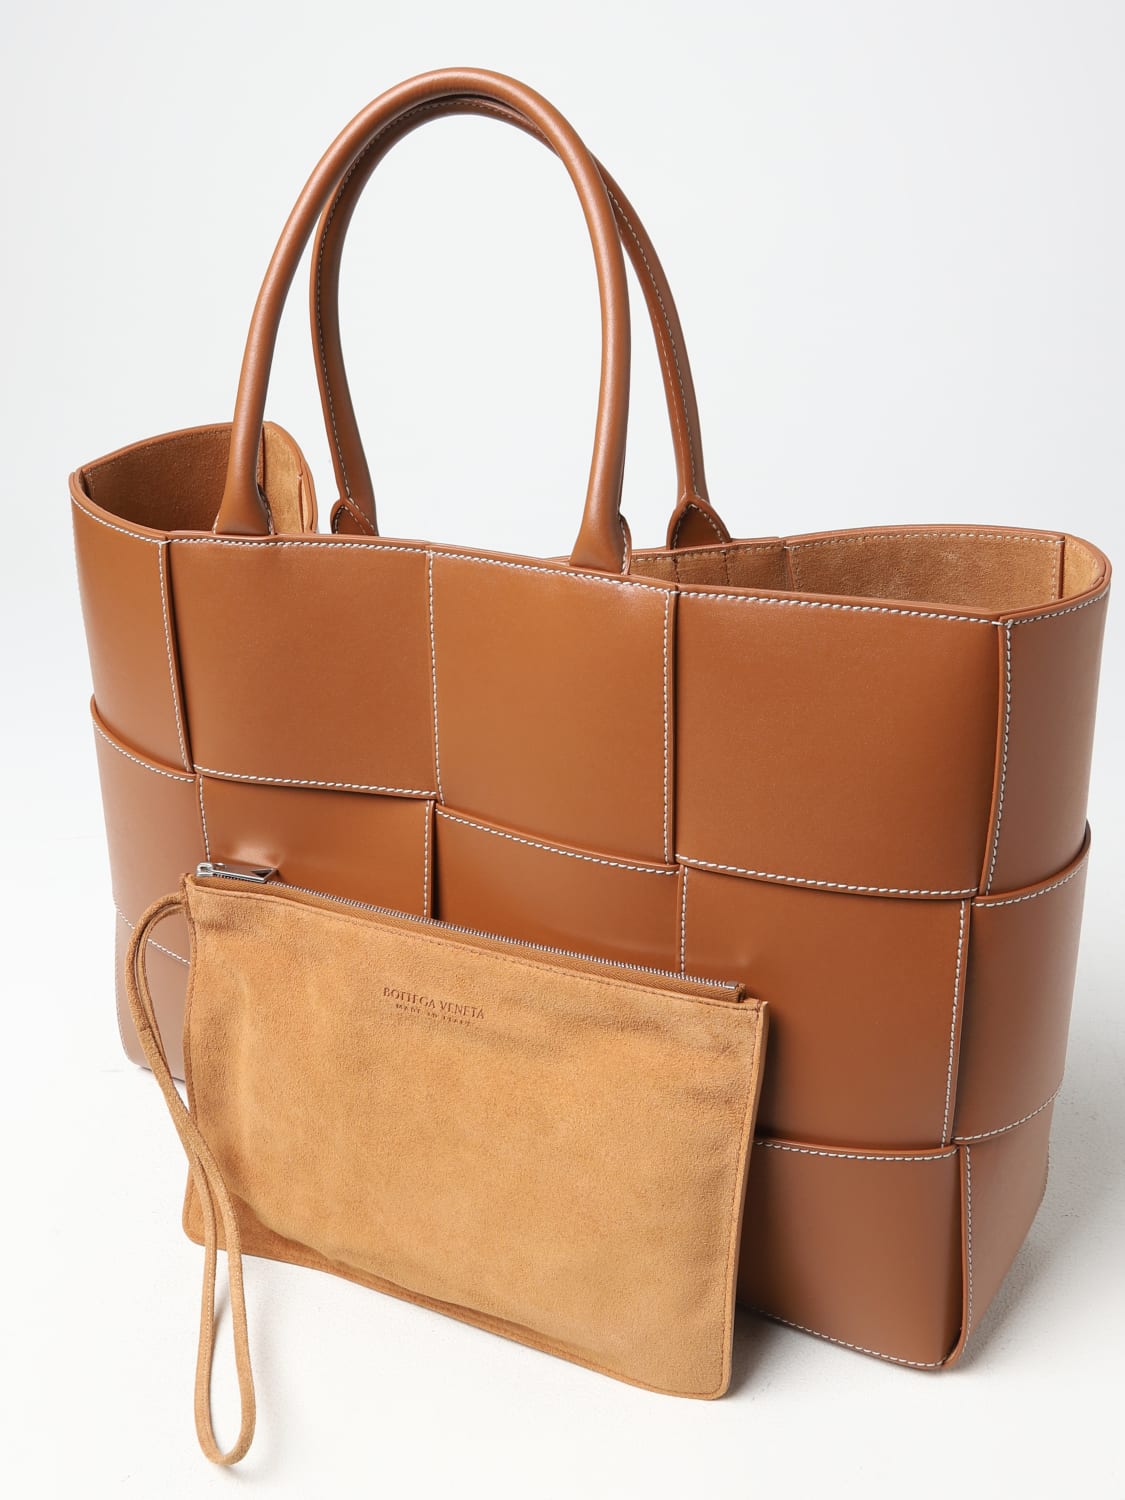 Bottega Veneta leather bag